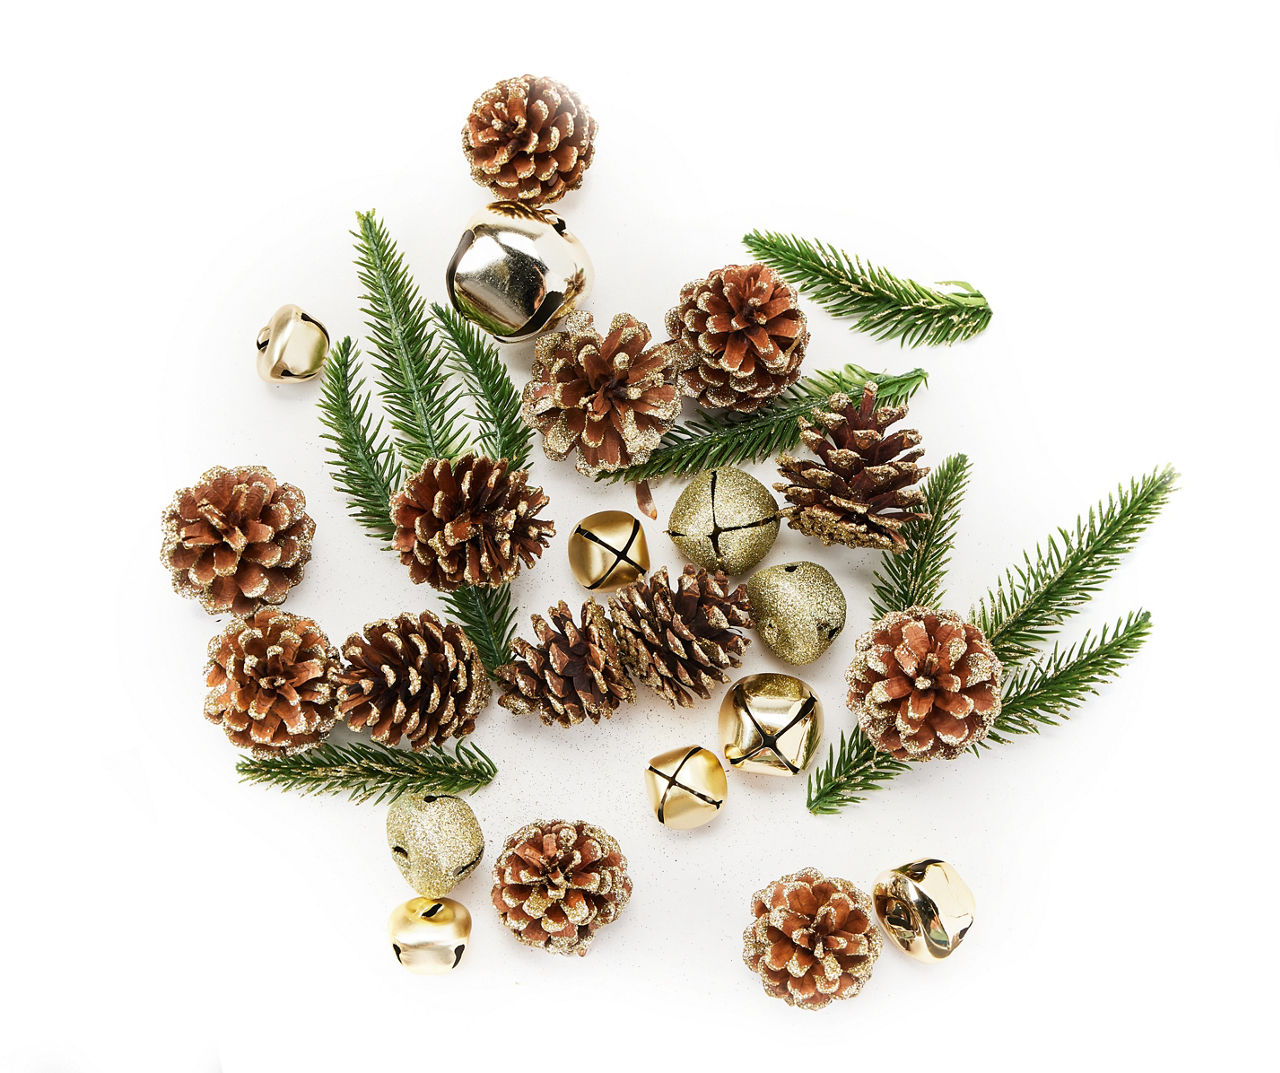 JOHOUSE 50PCS Natural Pinecone Ornaments, Pine Cones Bulk Natural Pinecones  Assortment for Fall Winter Christmas Bowl Fillers